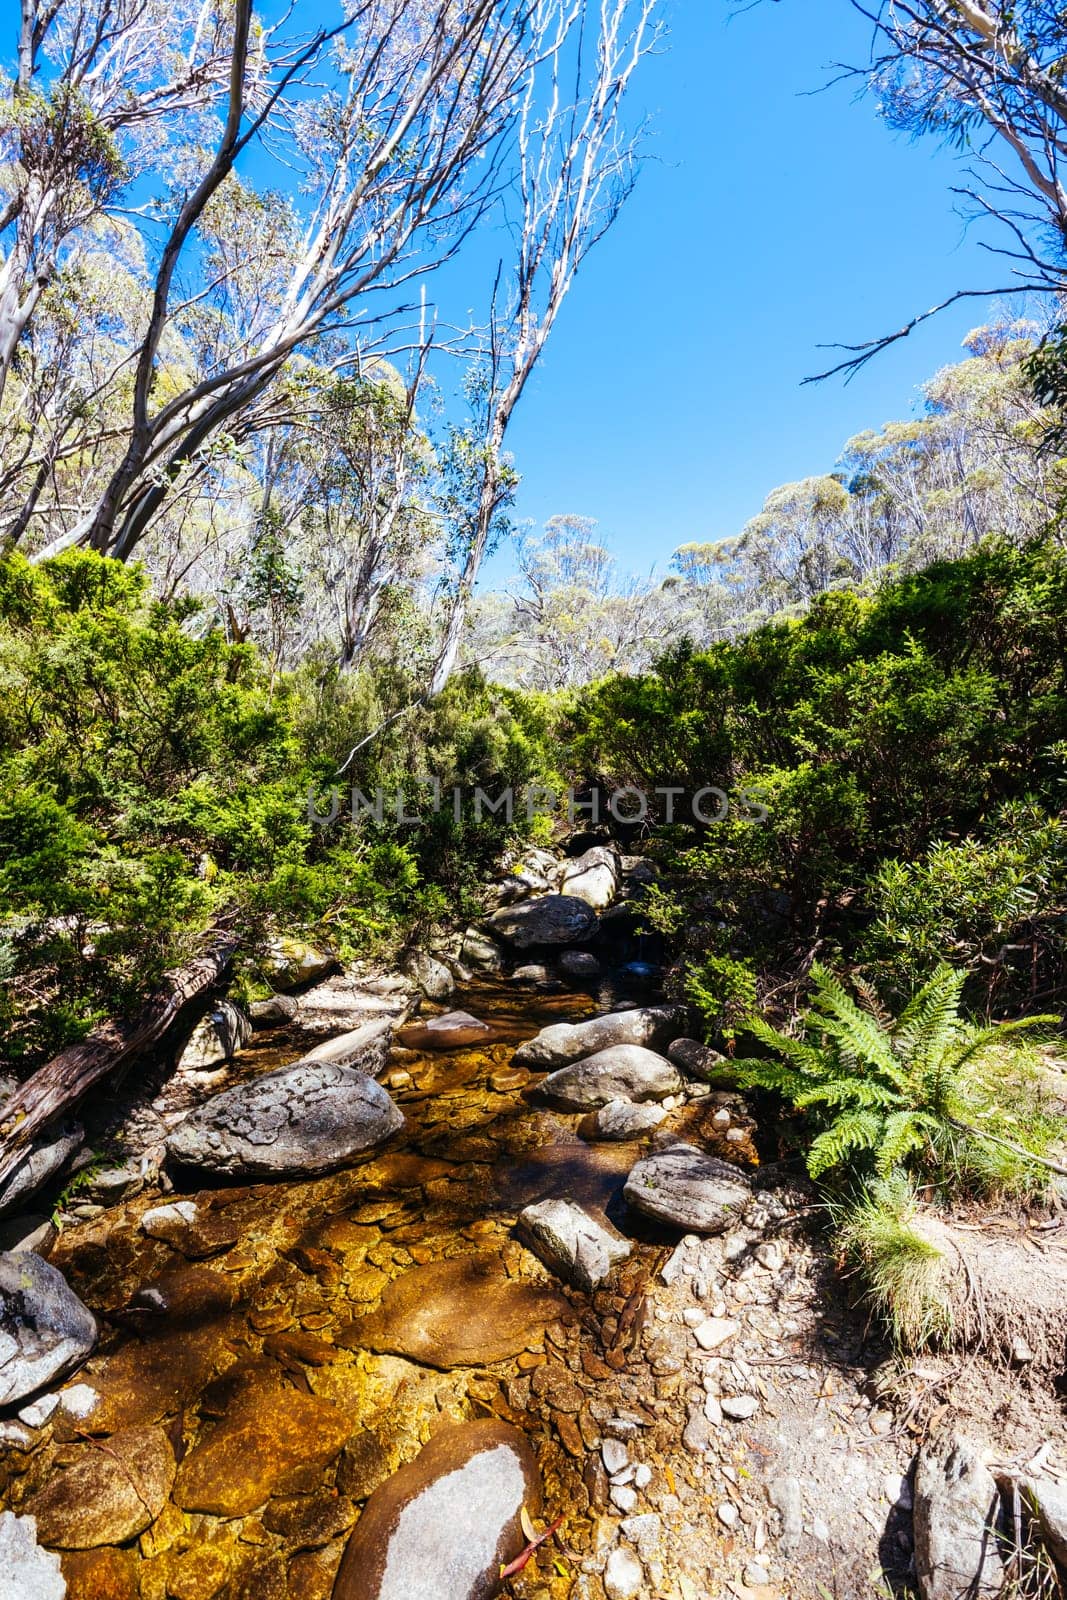 River at Horse Camp Hut in Kosciuszko National Park in Australia by FiledIMAGE